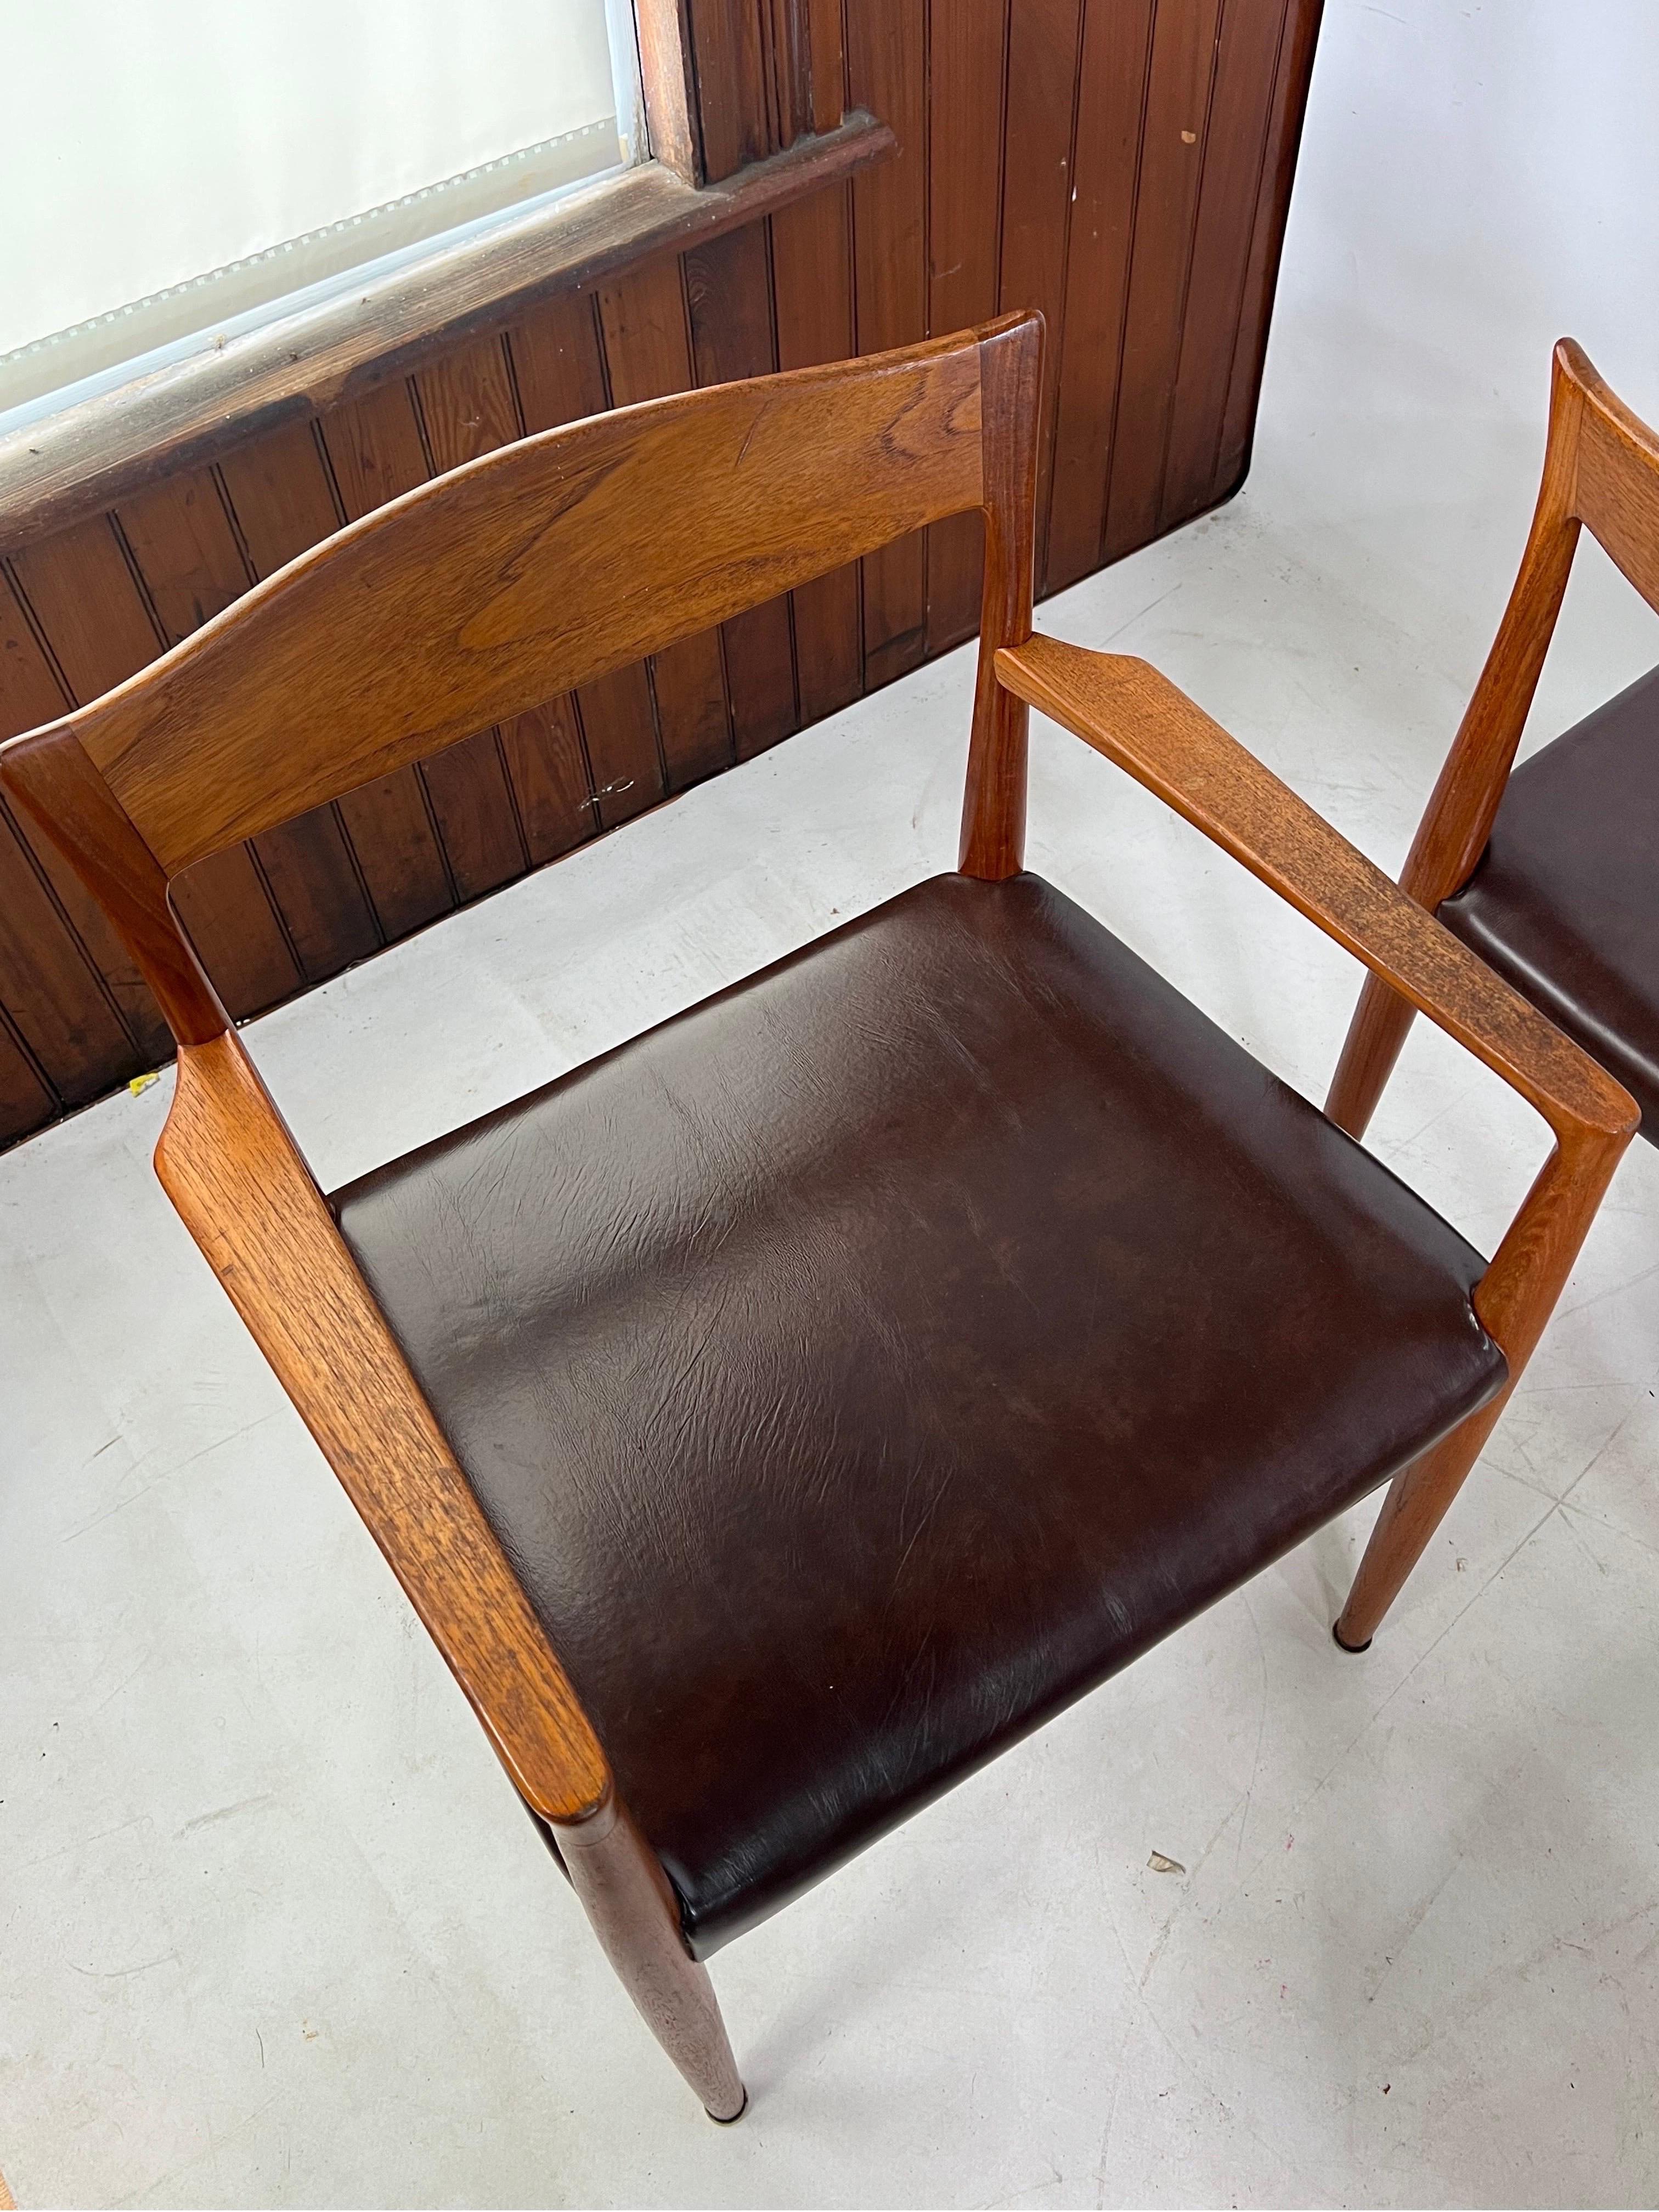 Vintage Danish Teak Sculptural Dining Chairs - a Set of 6 For Sale 4